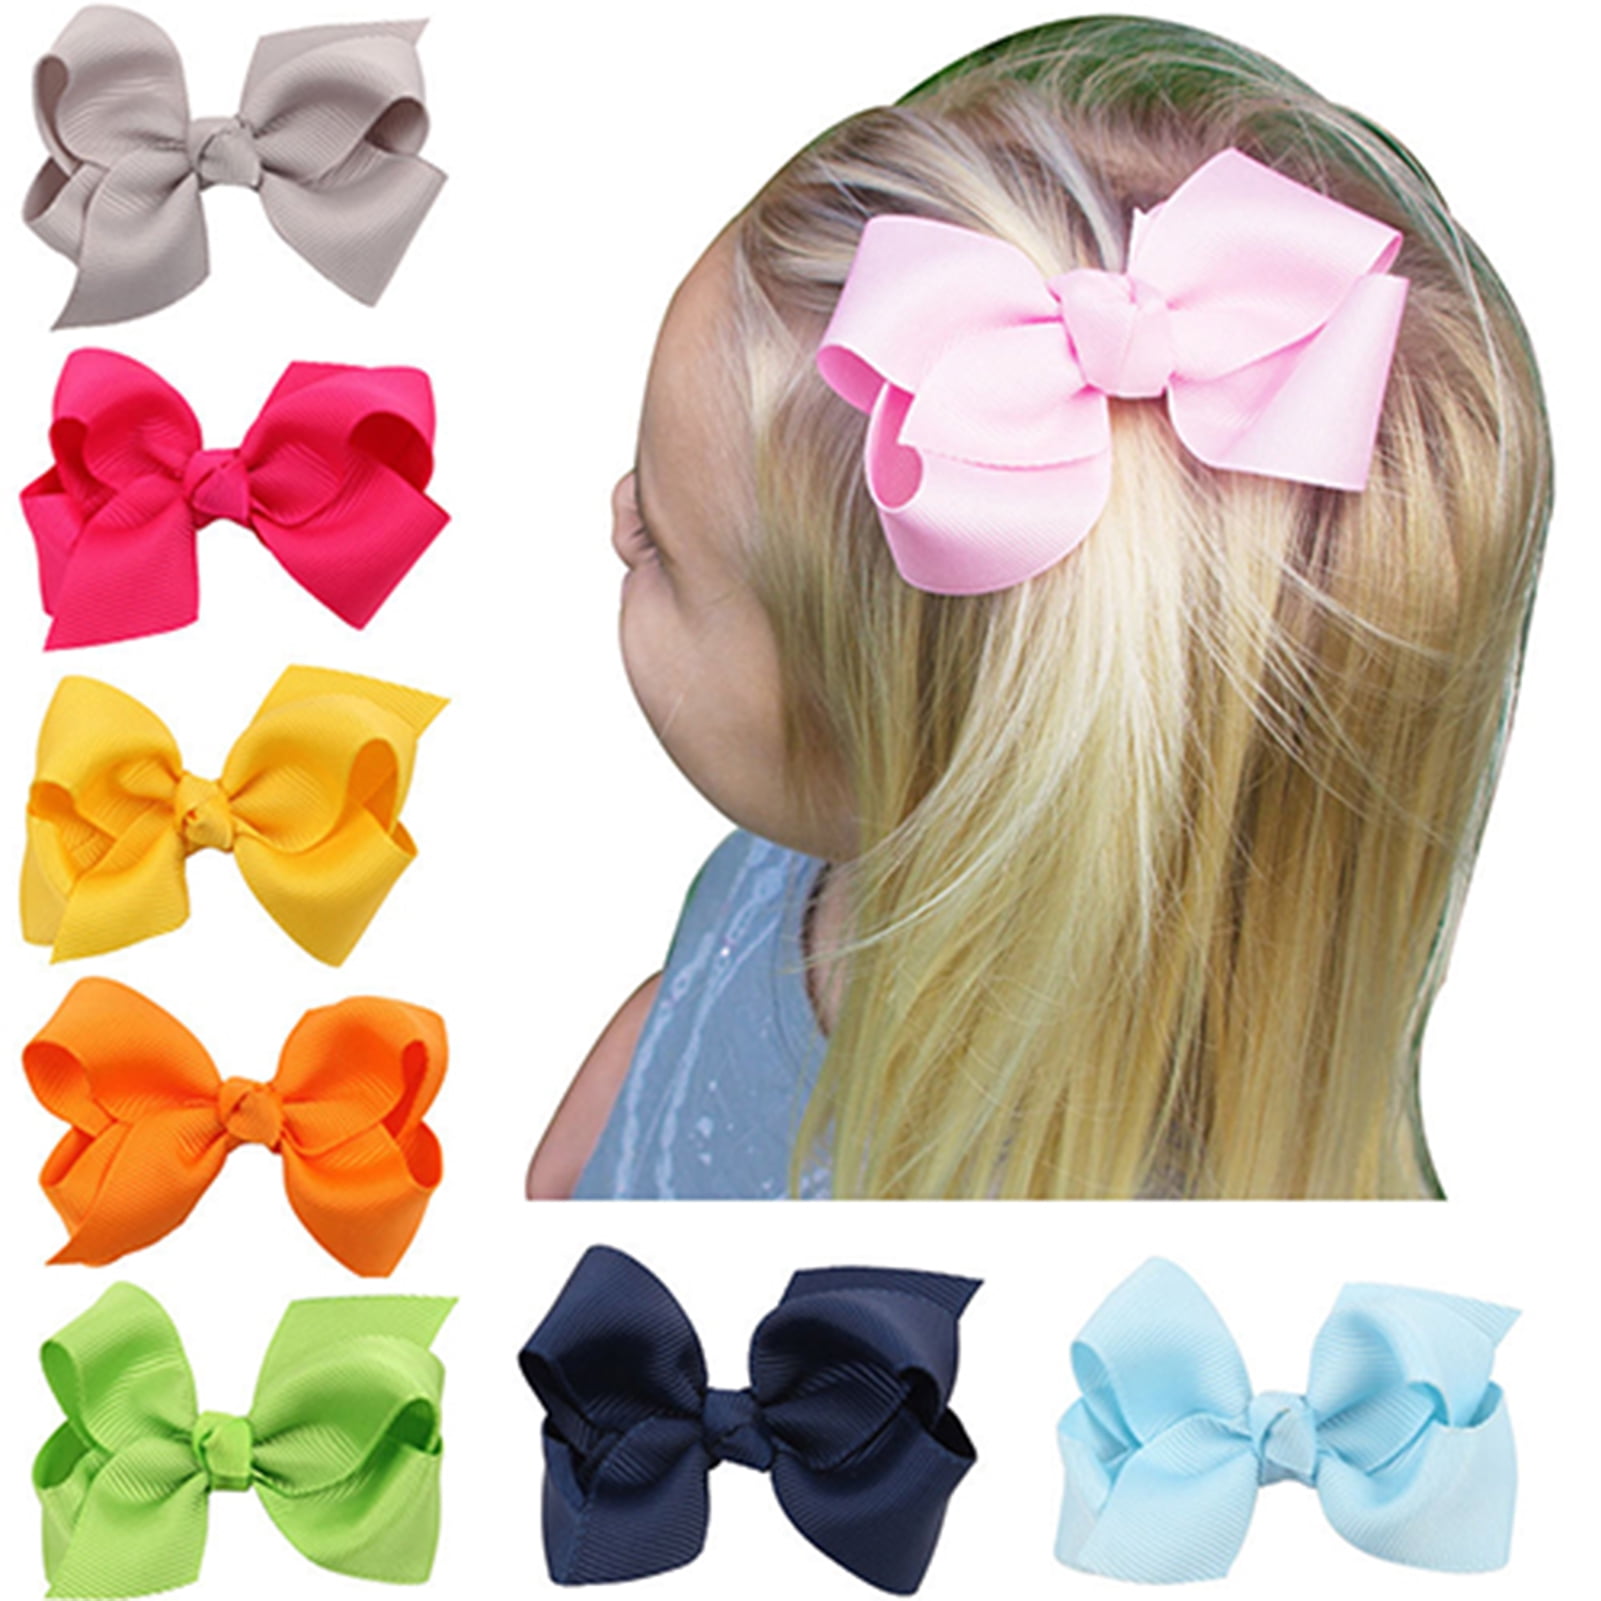 30pcs Artificial Boutique Bowknot For Kids Headbands Hair Bows NO CLIPS 